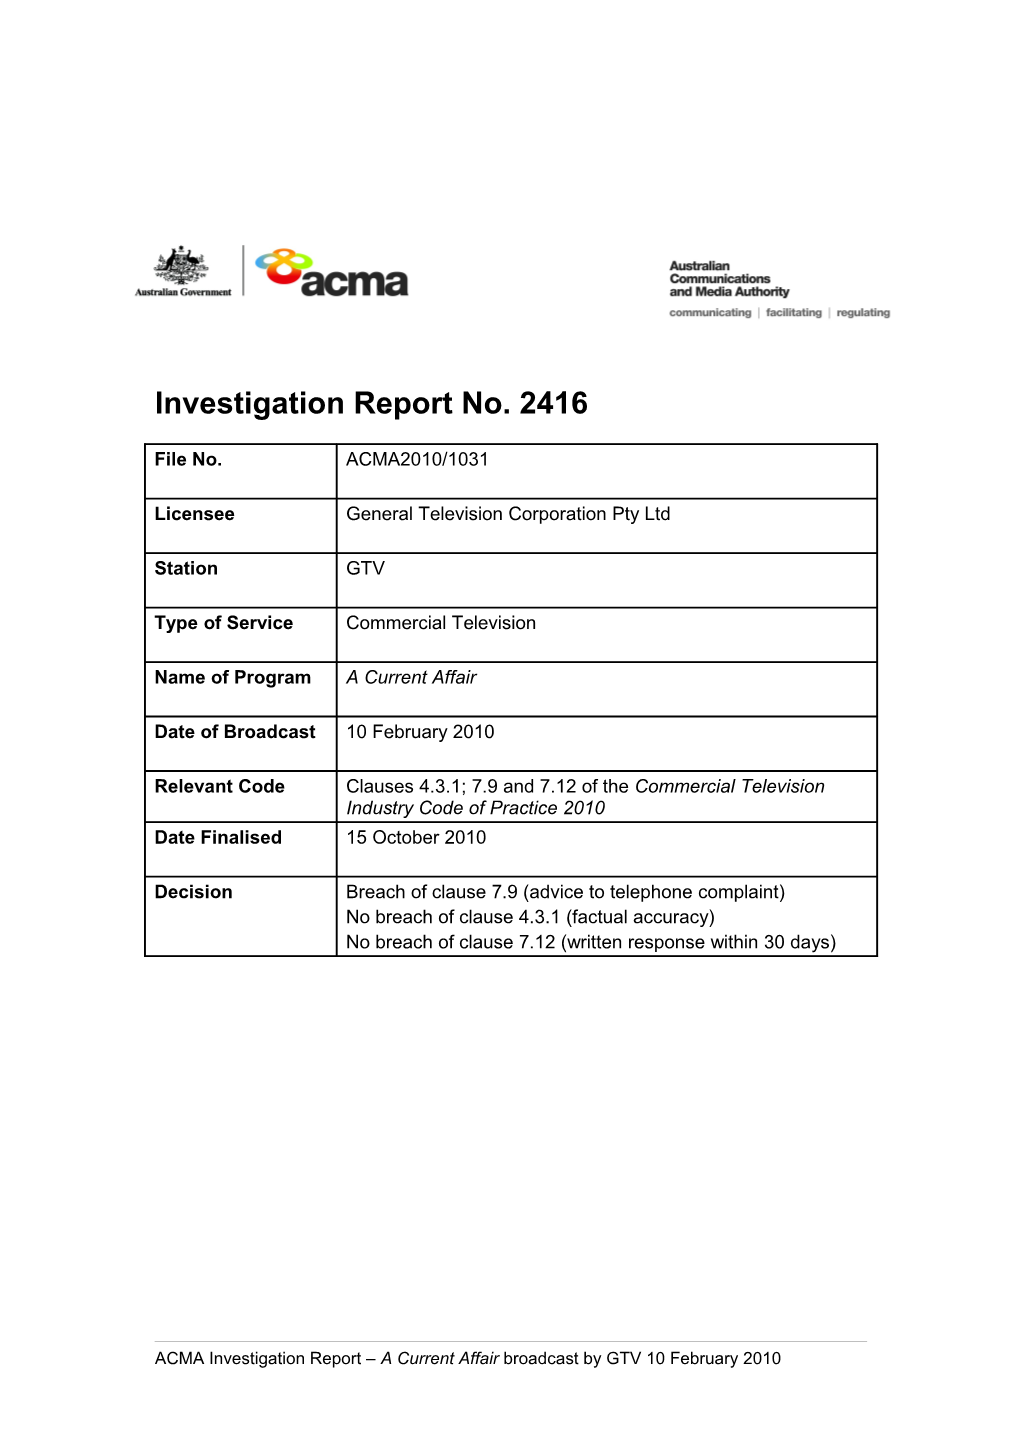 GTV - ACMA Investigation Report 2416